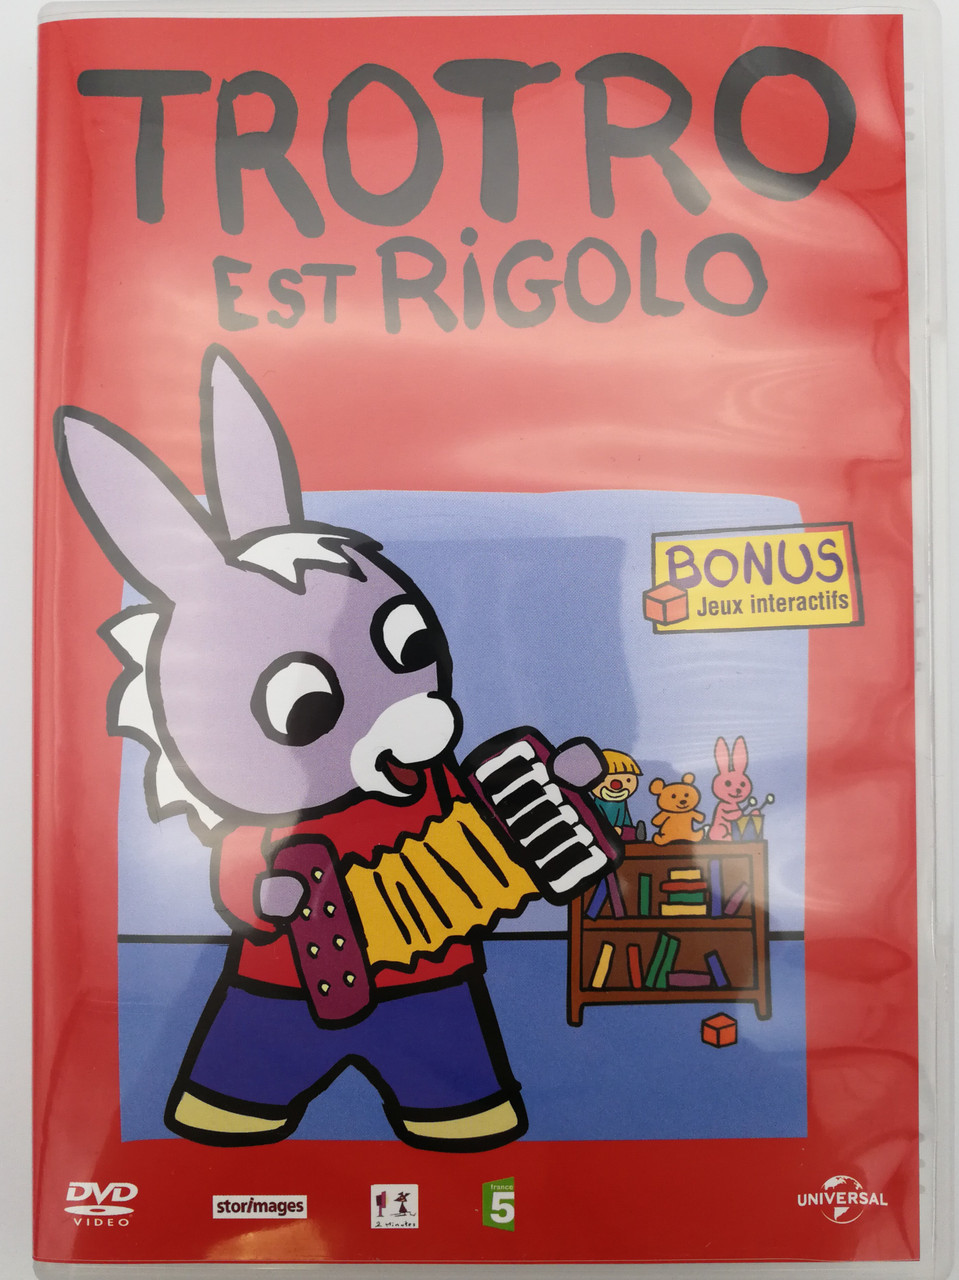 Trotro est Rigolo DVD 2004 / Bonus: Interacive Games - Jeux Interactifs /  Directed by Eric Cazes, Stephane Lezoray / French animated tv show / Season  1 - 13 episodes - bibleinmylanguage